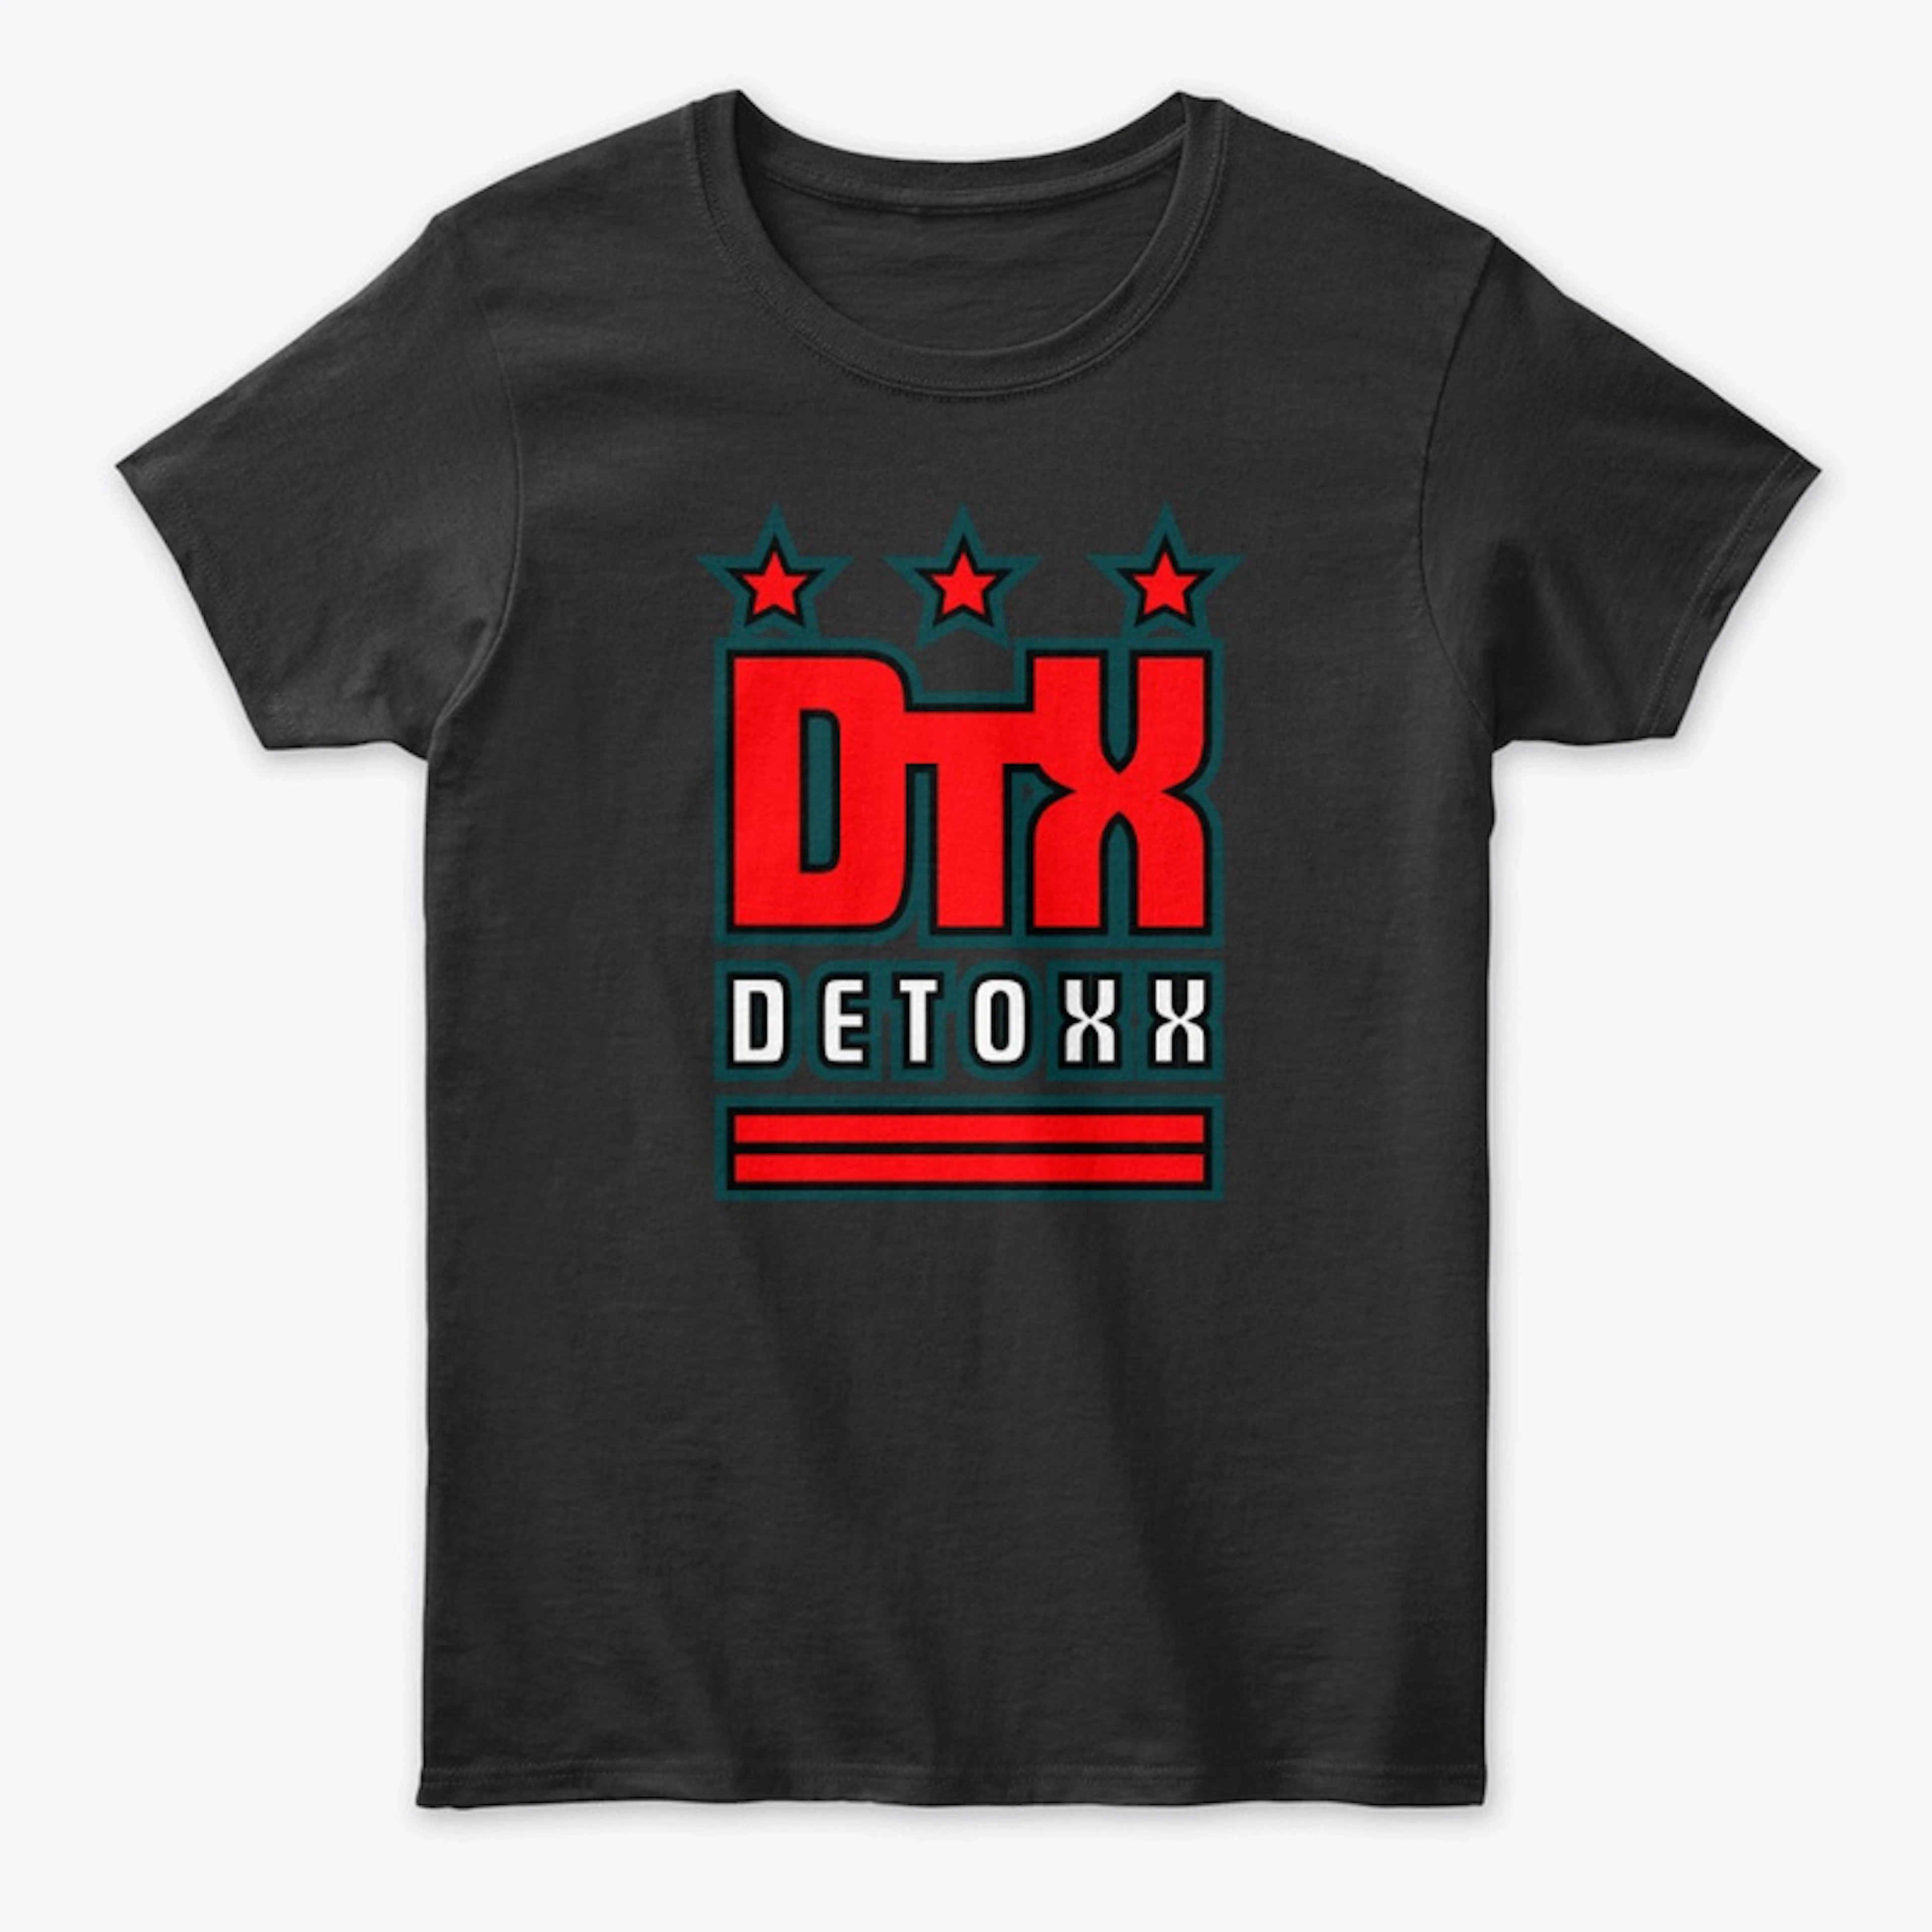 DETOXX DC LOGO